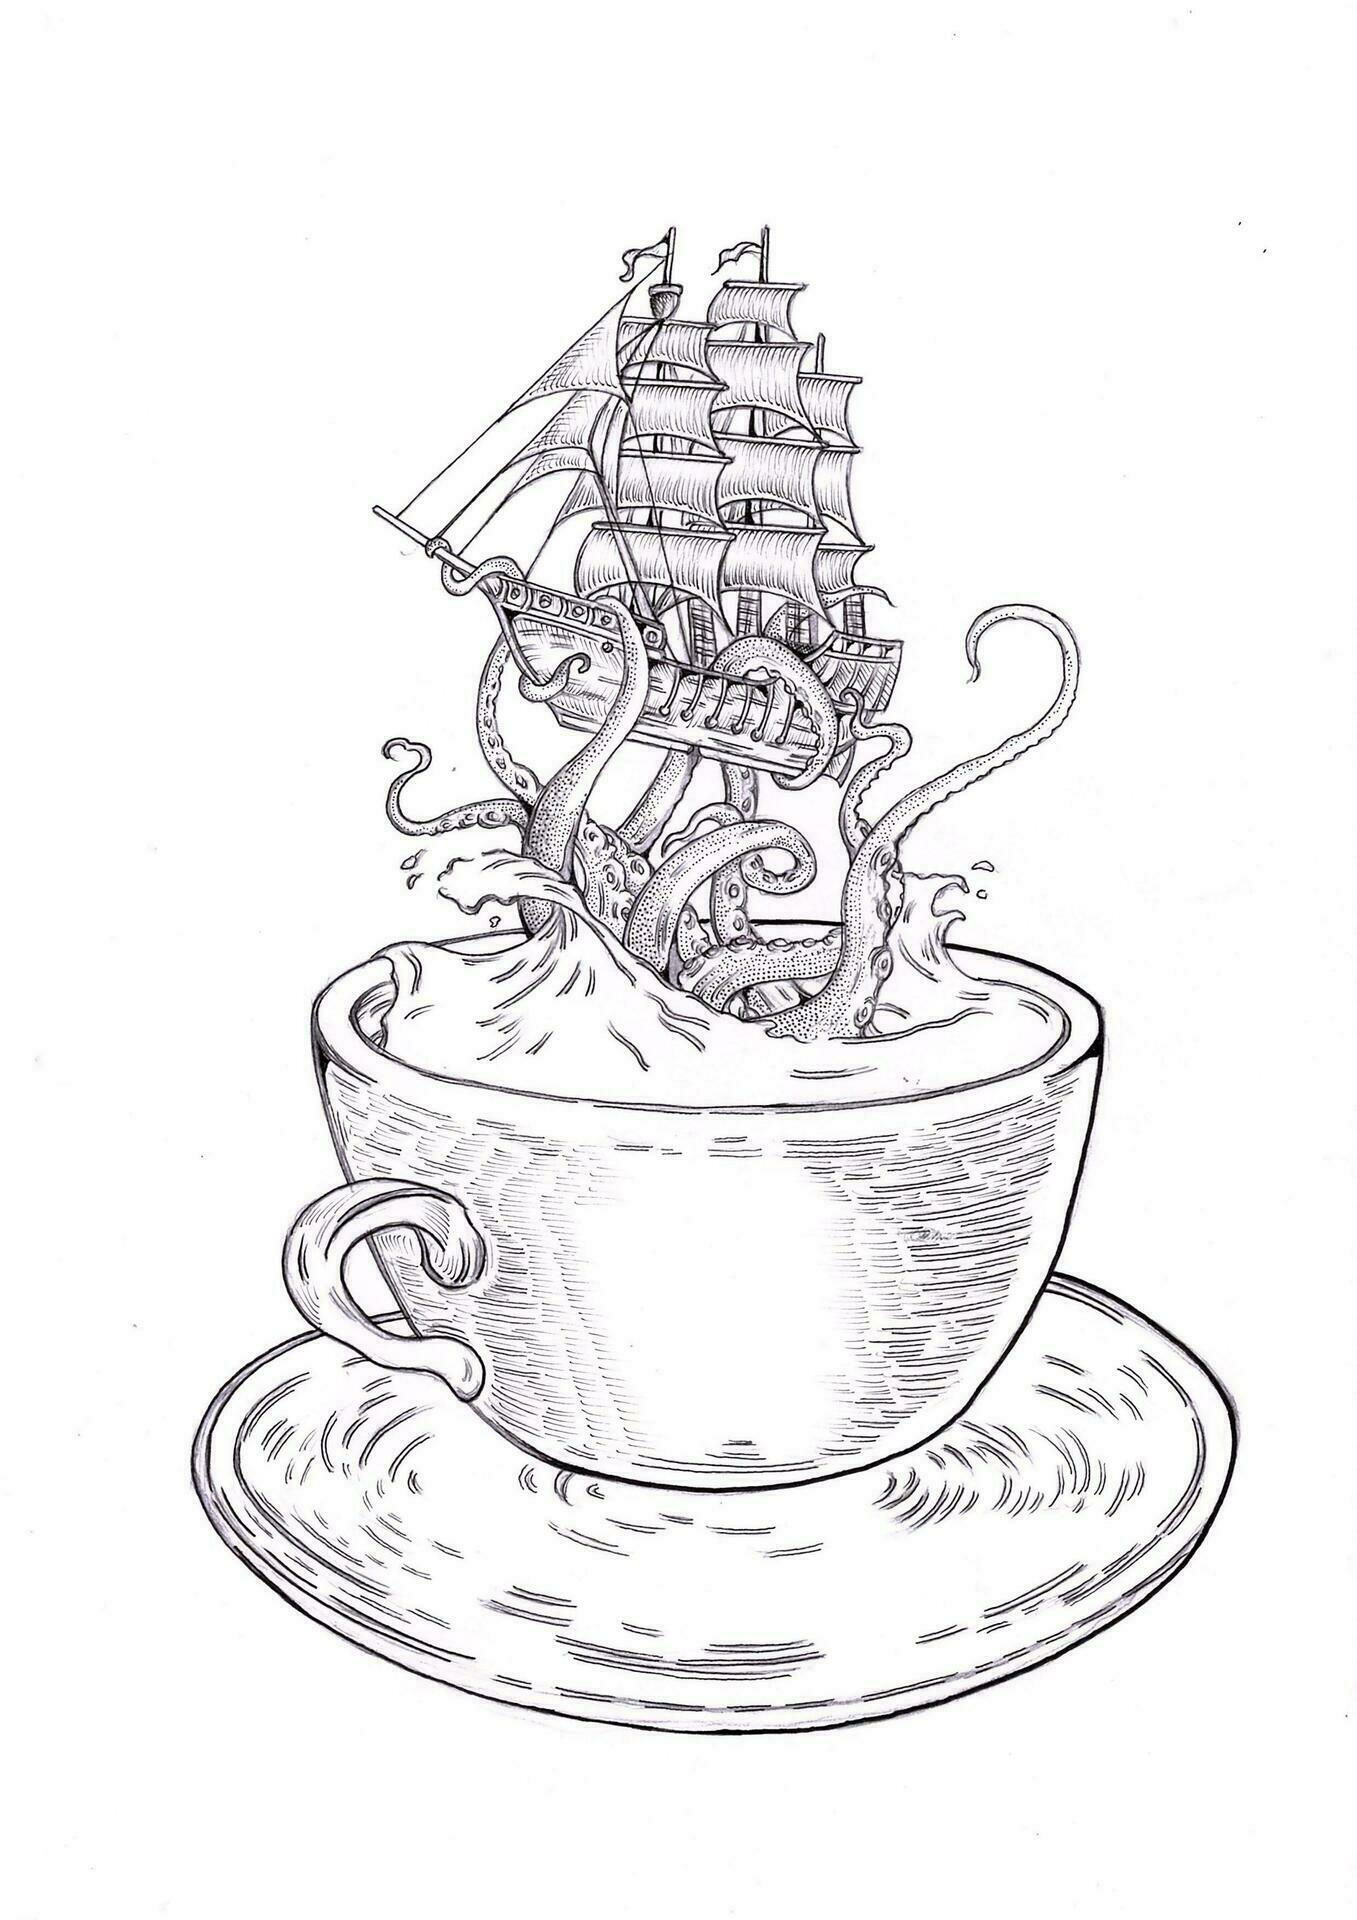 26 - Storm in a tea cup